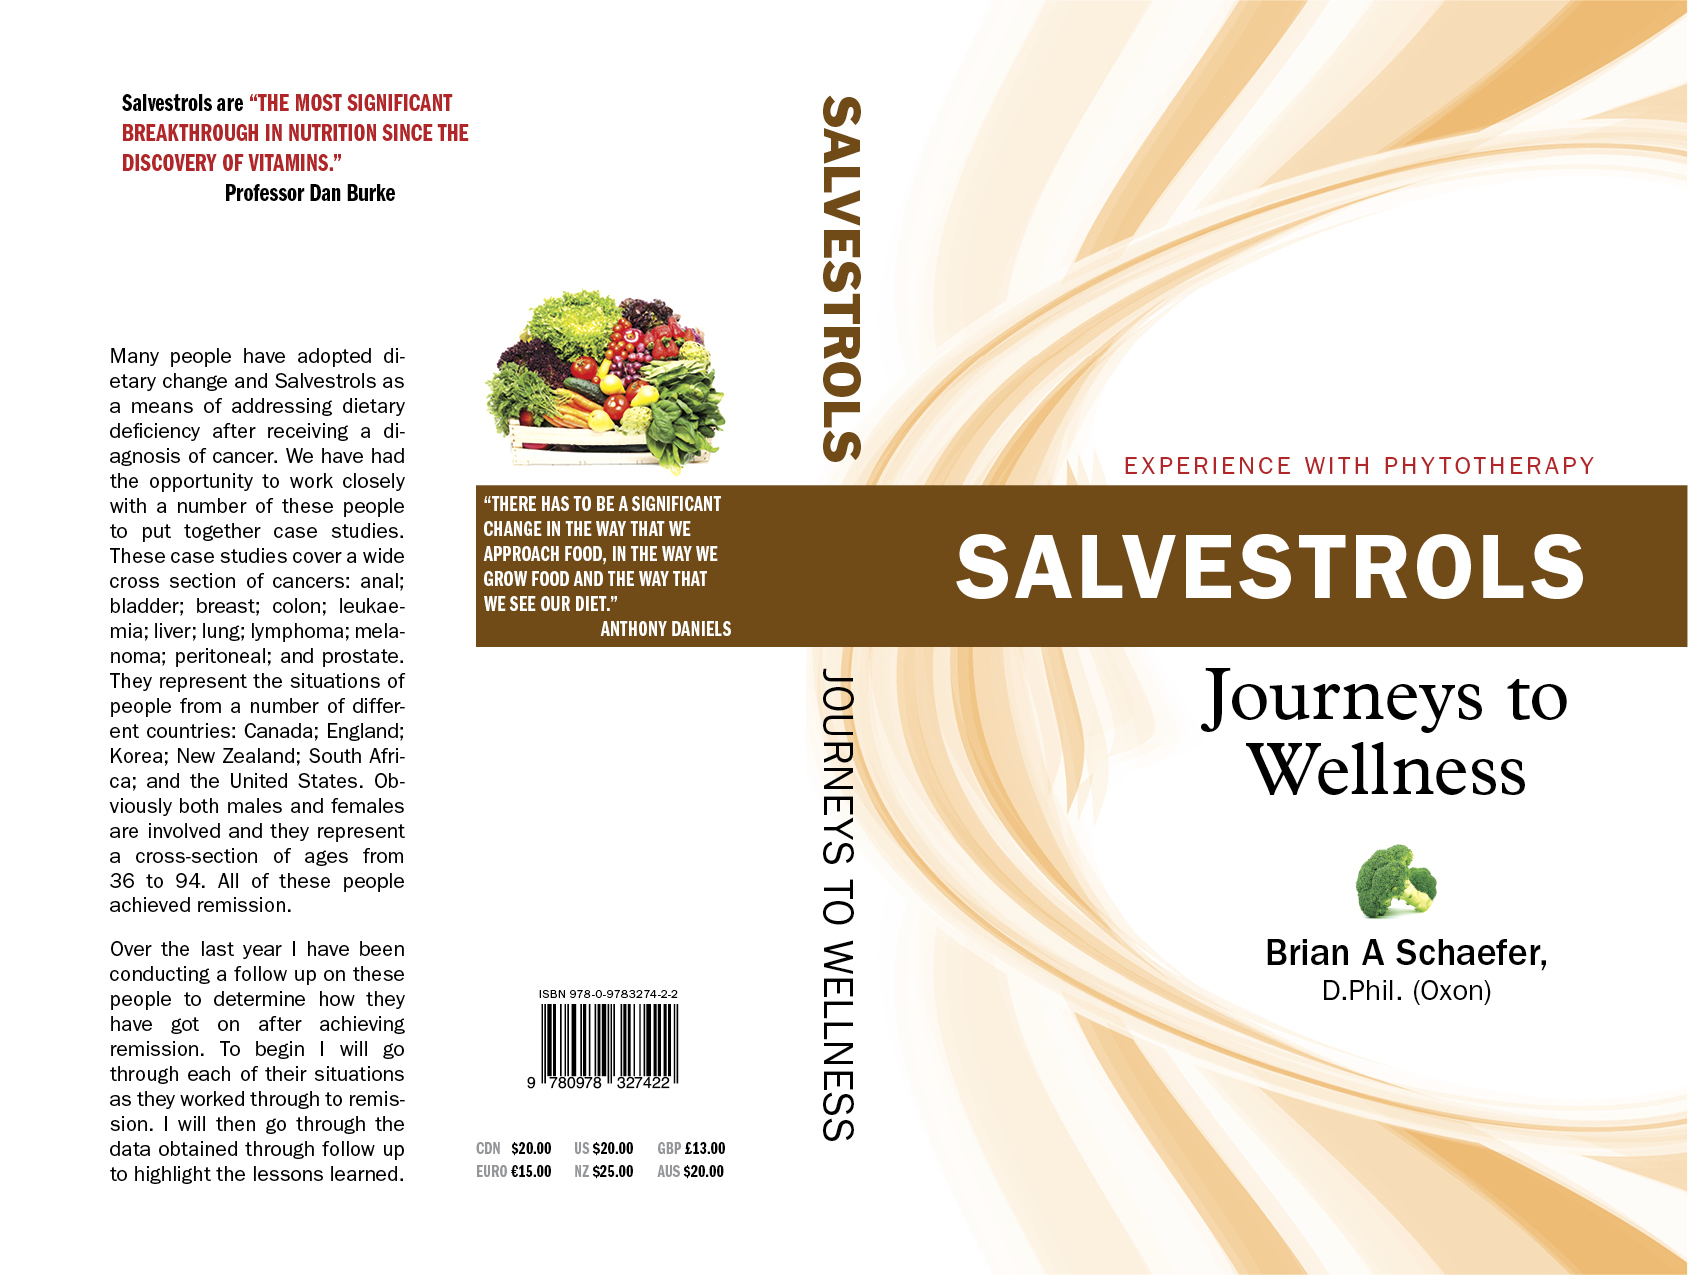 Salvestrols: Journeys to Wellness